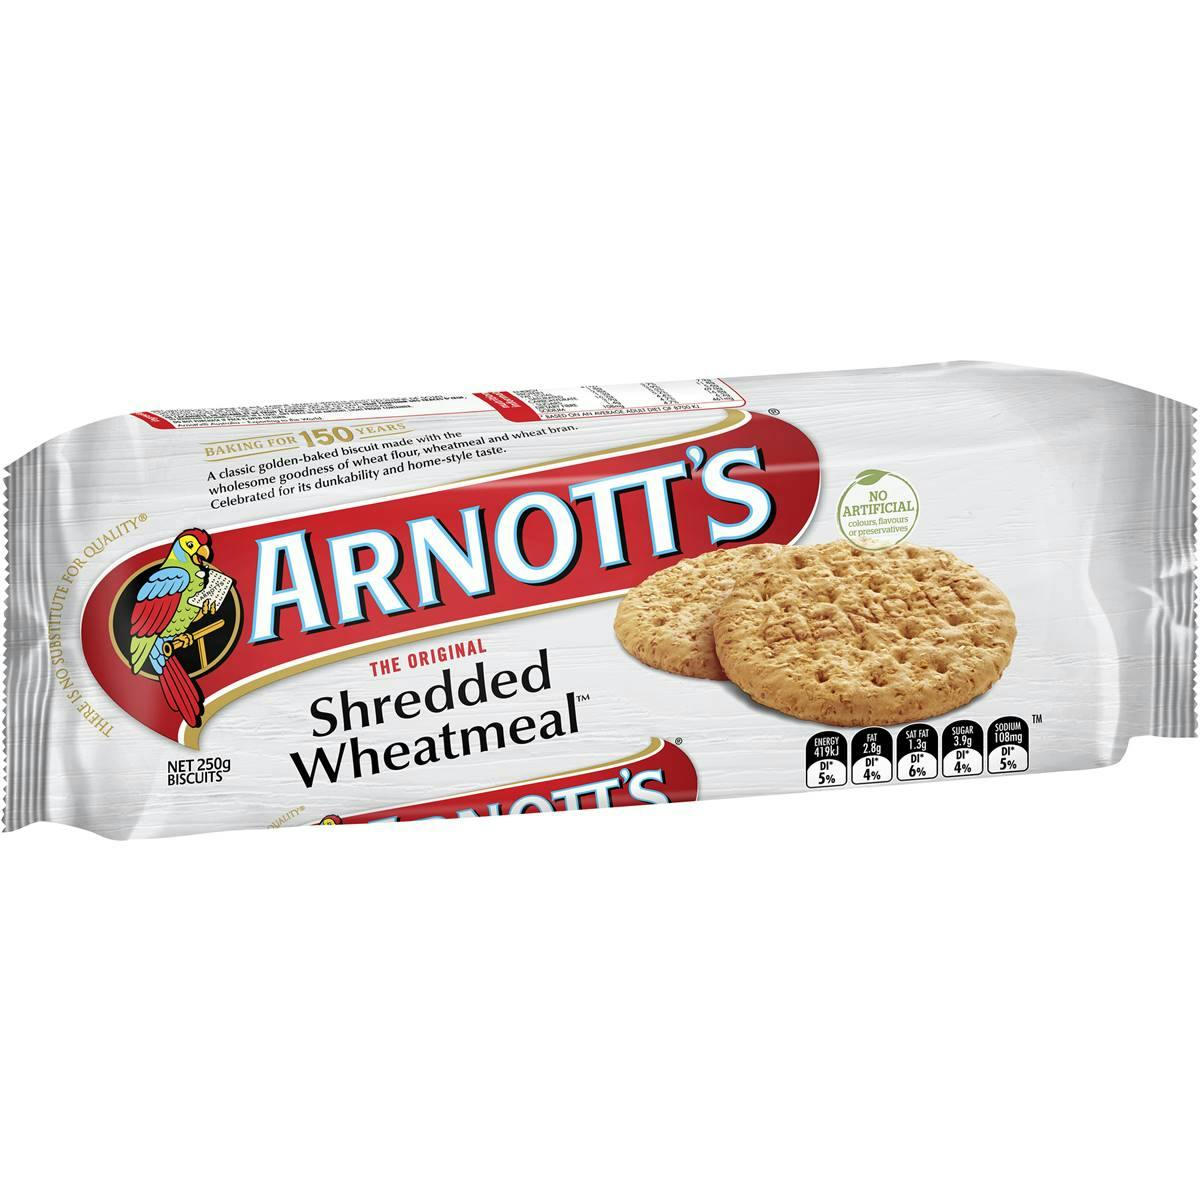 Arnott's Shredded Wheatmeal Plain Biscuits